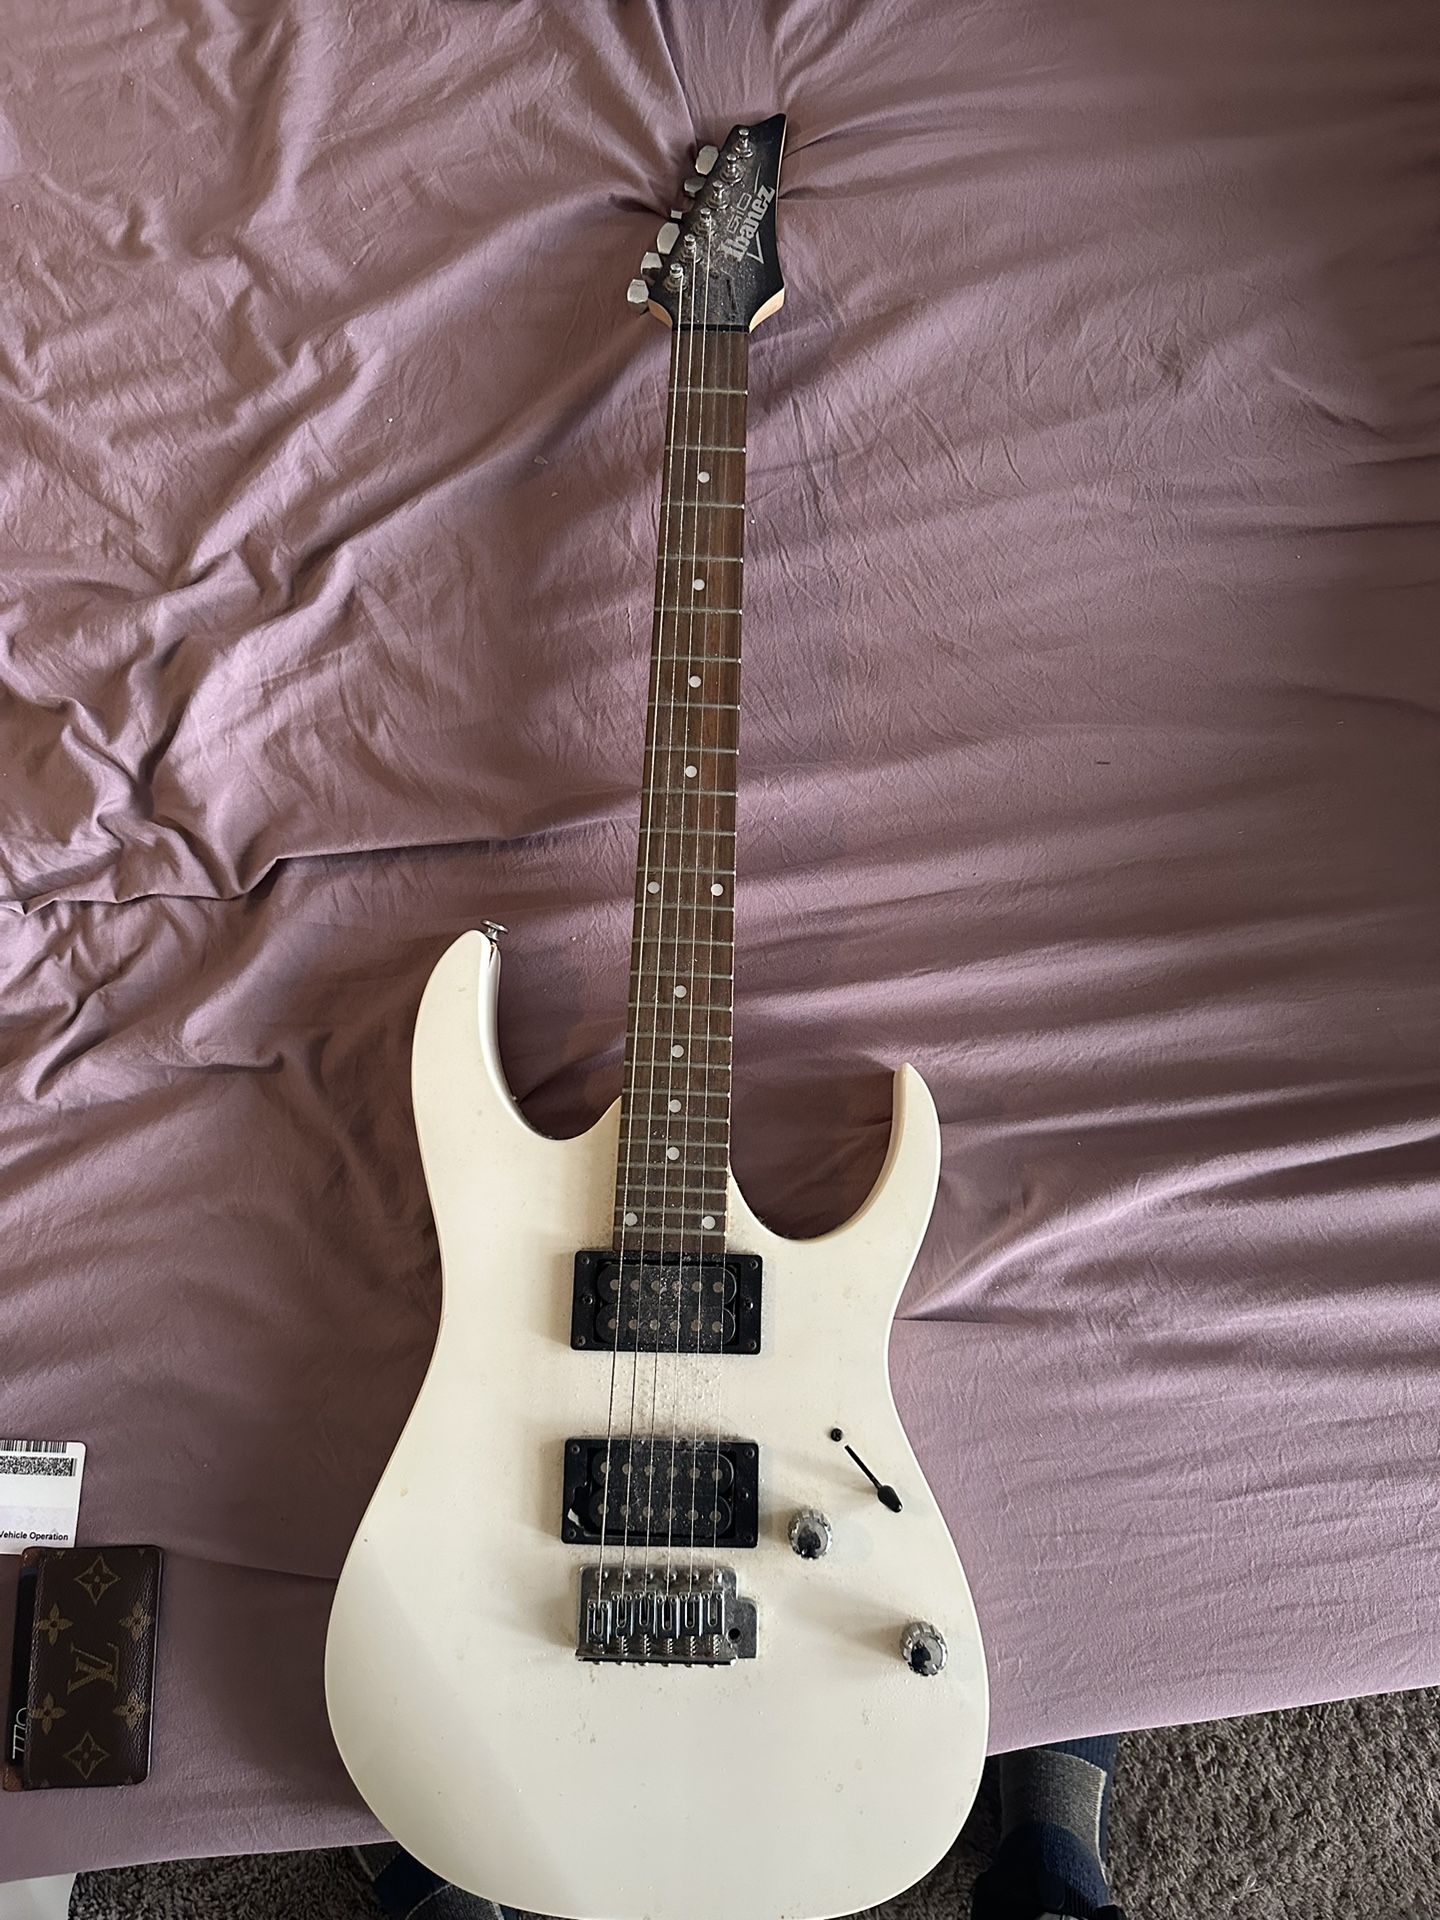 Ivory White Ibanez Guitar